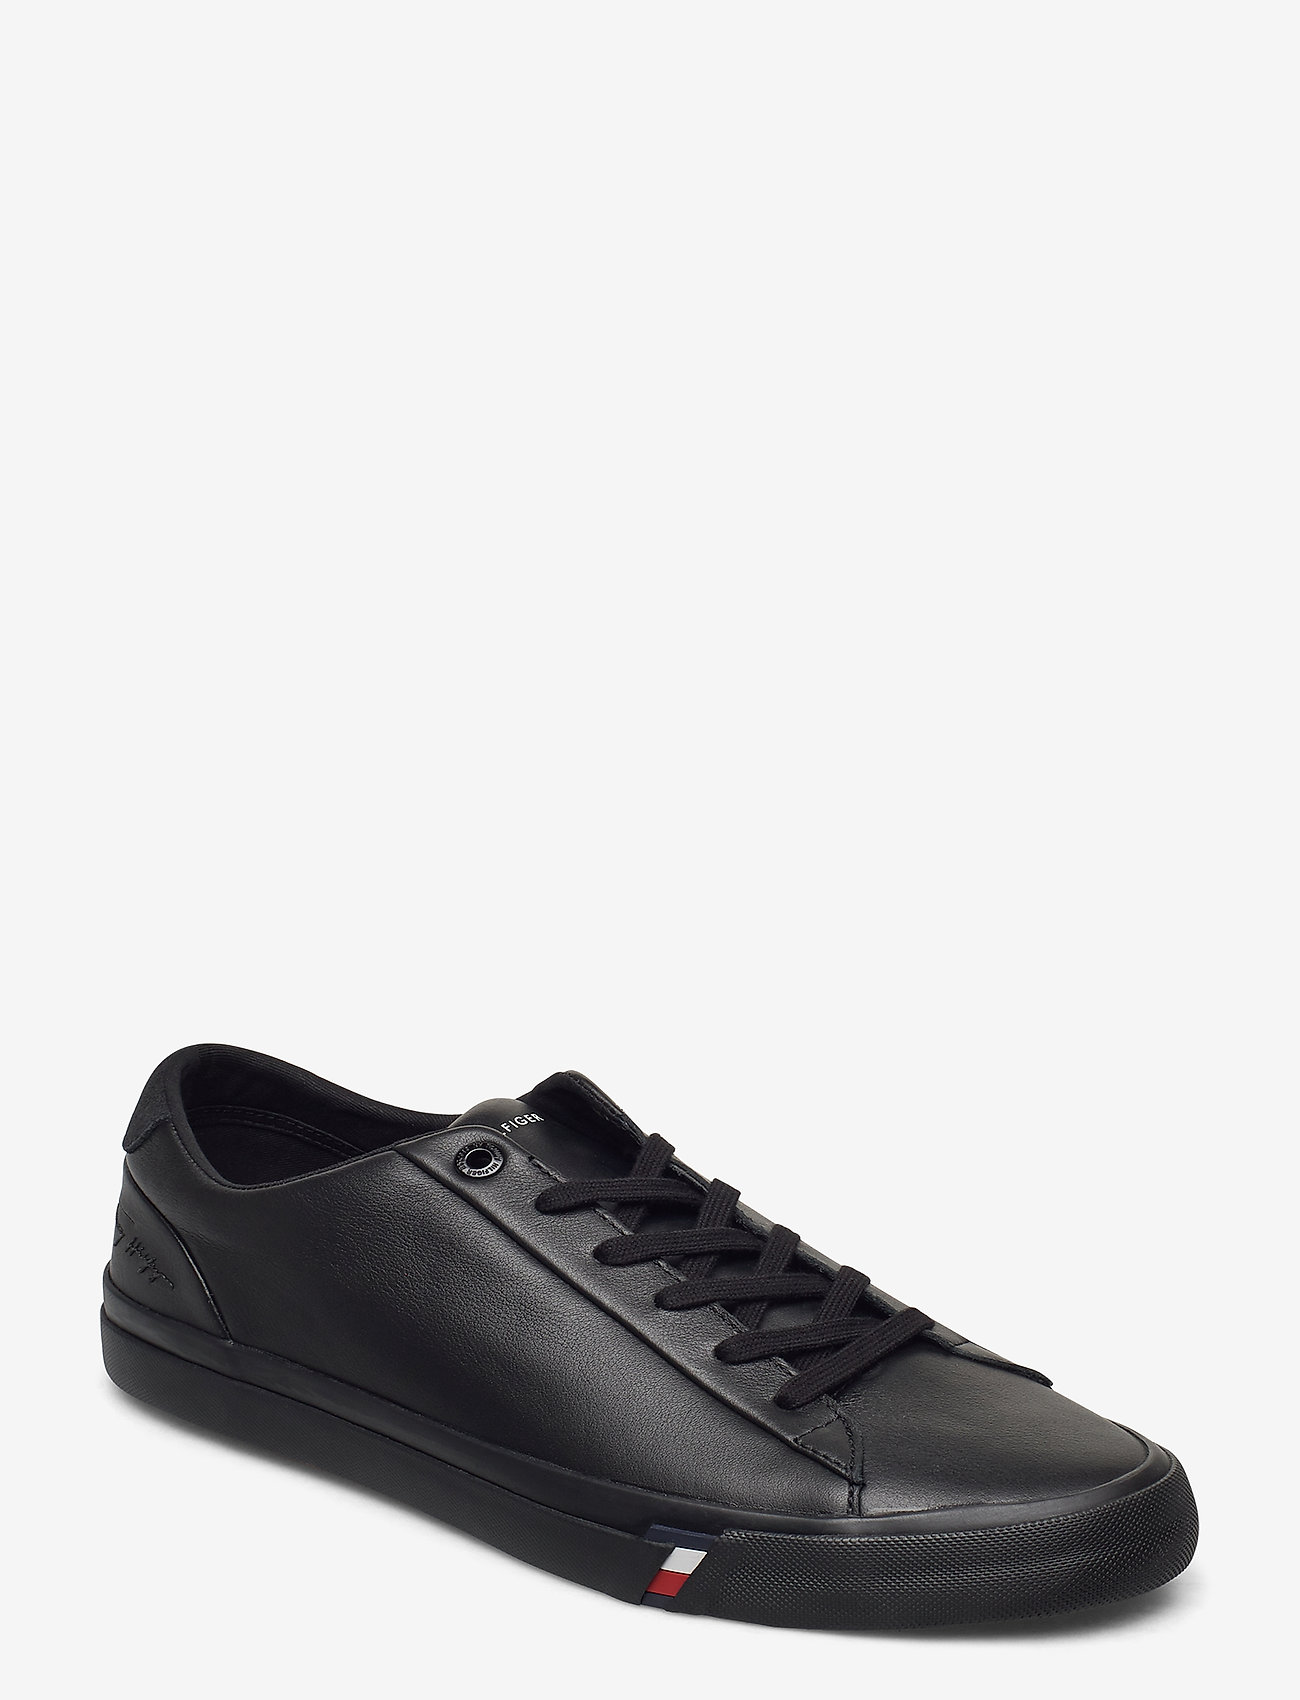 Corporate Leather Sneaker (Black) (109 